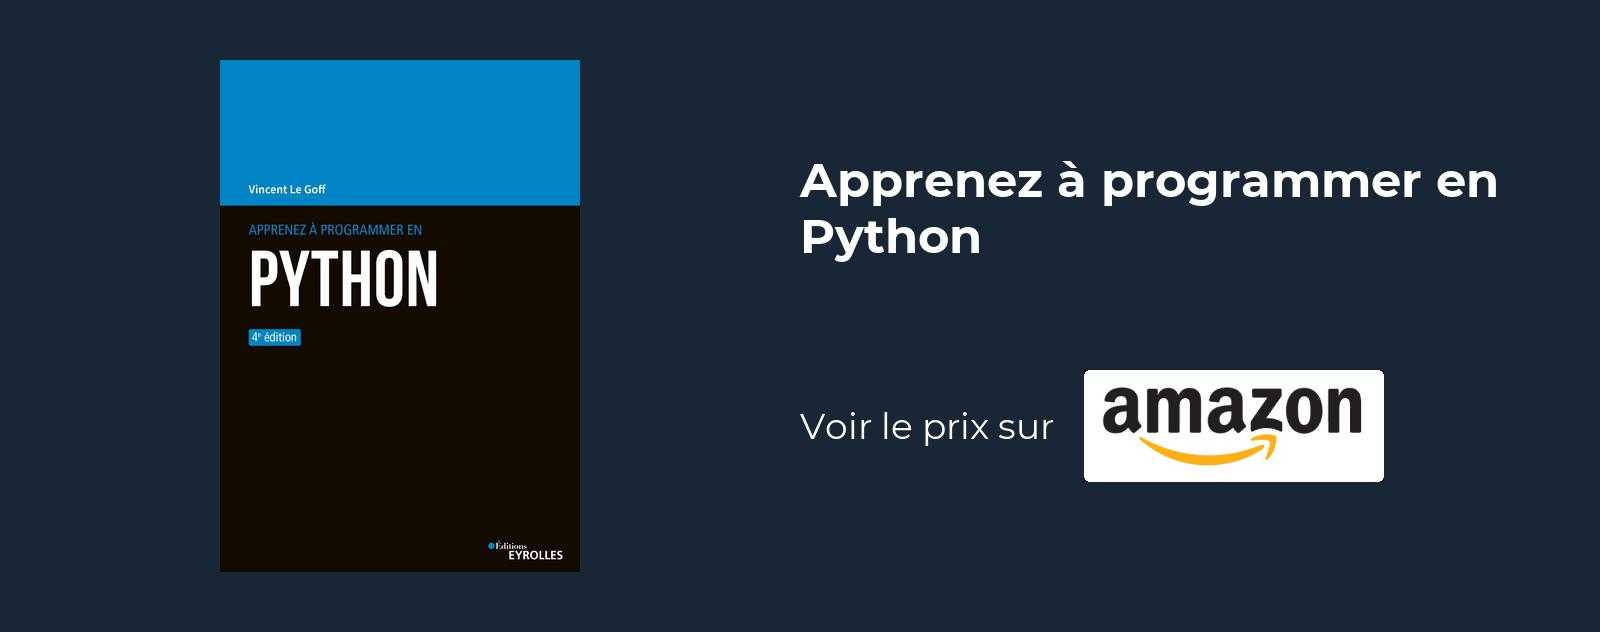 Apprenez a programmer en python